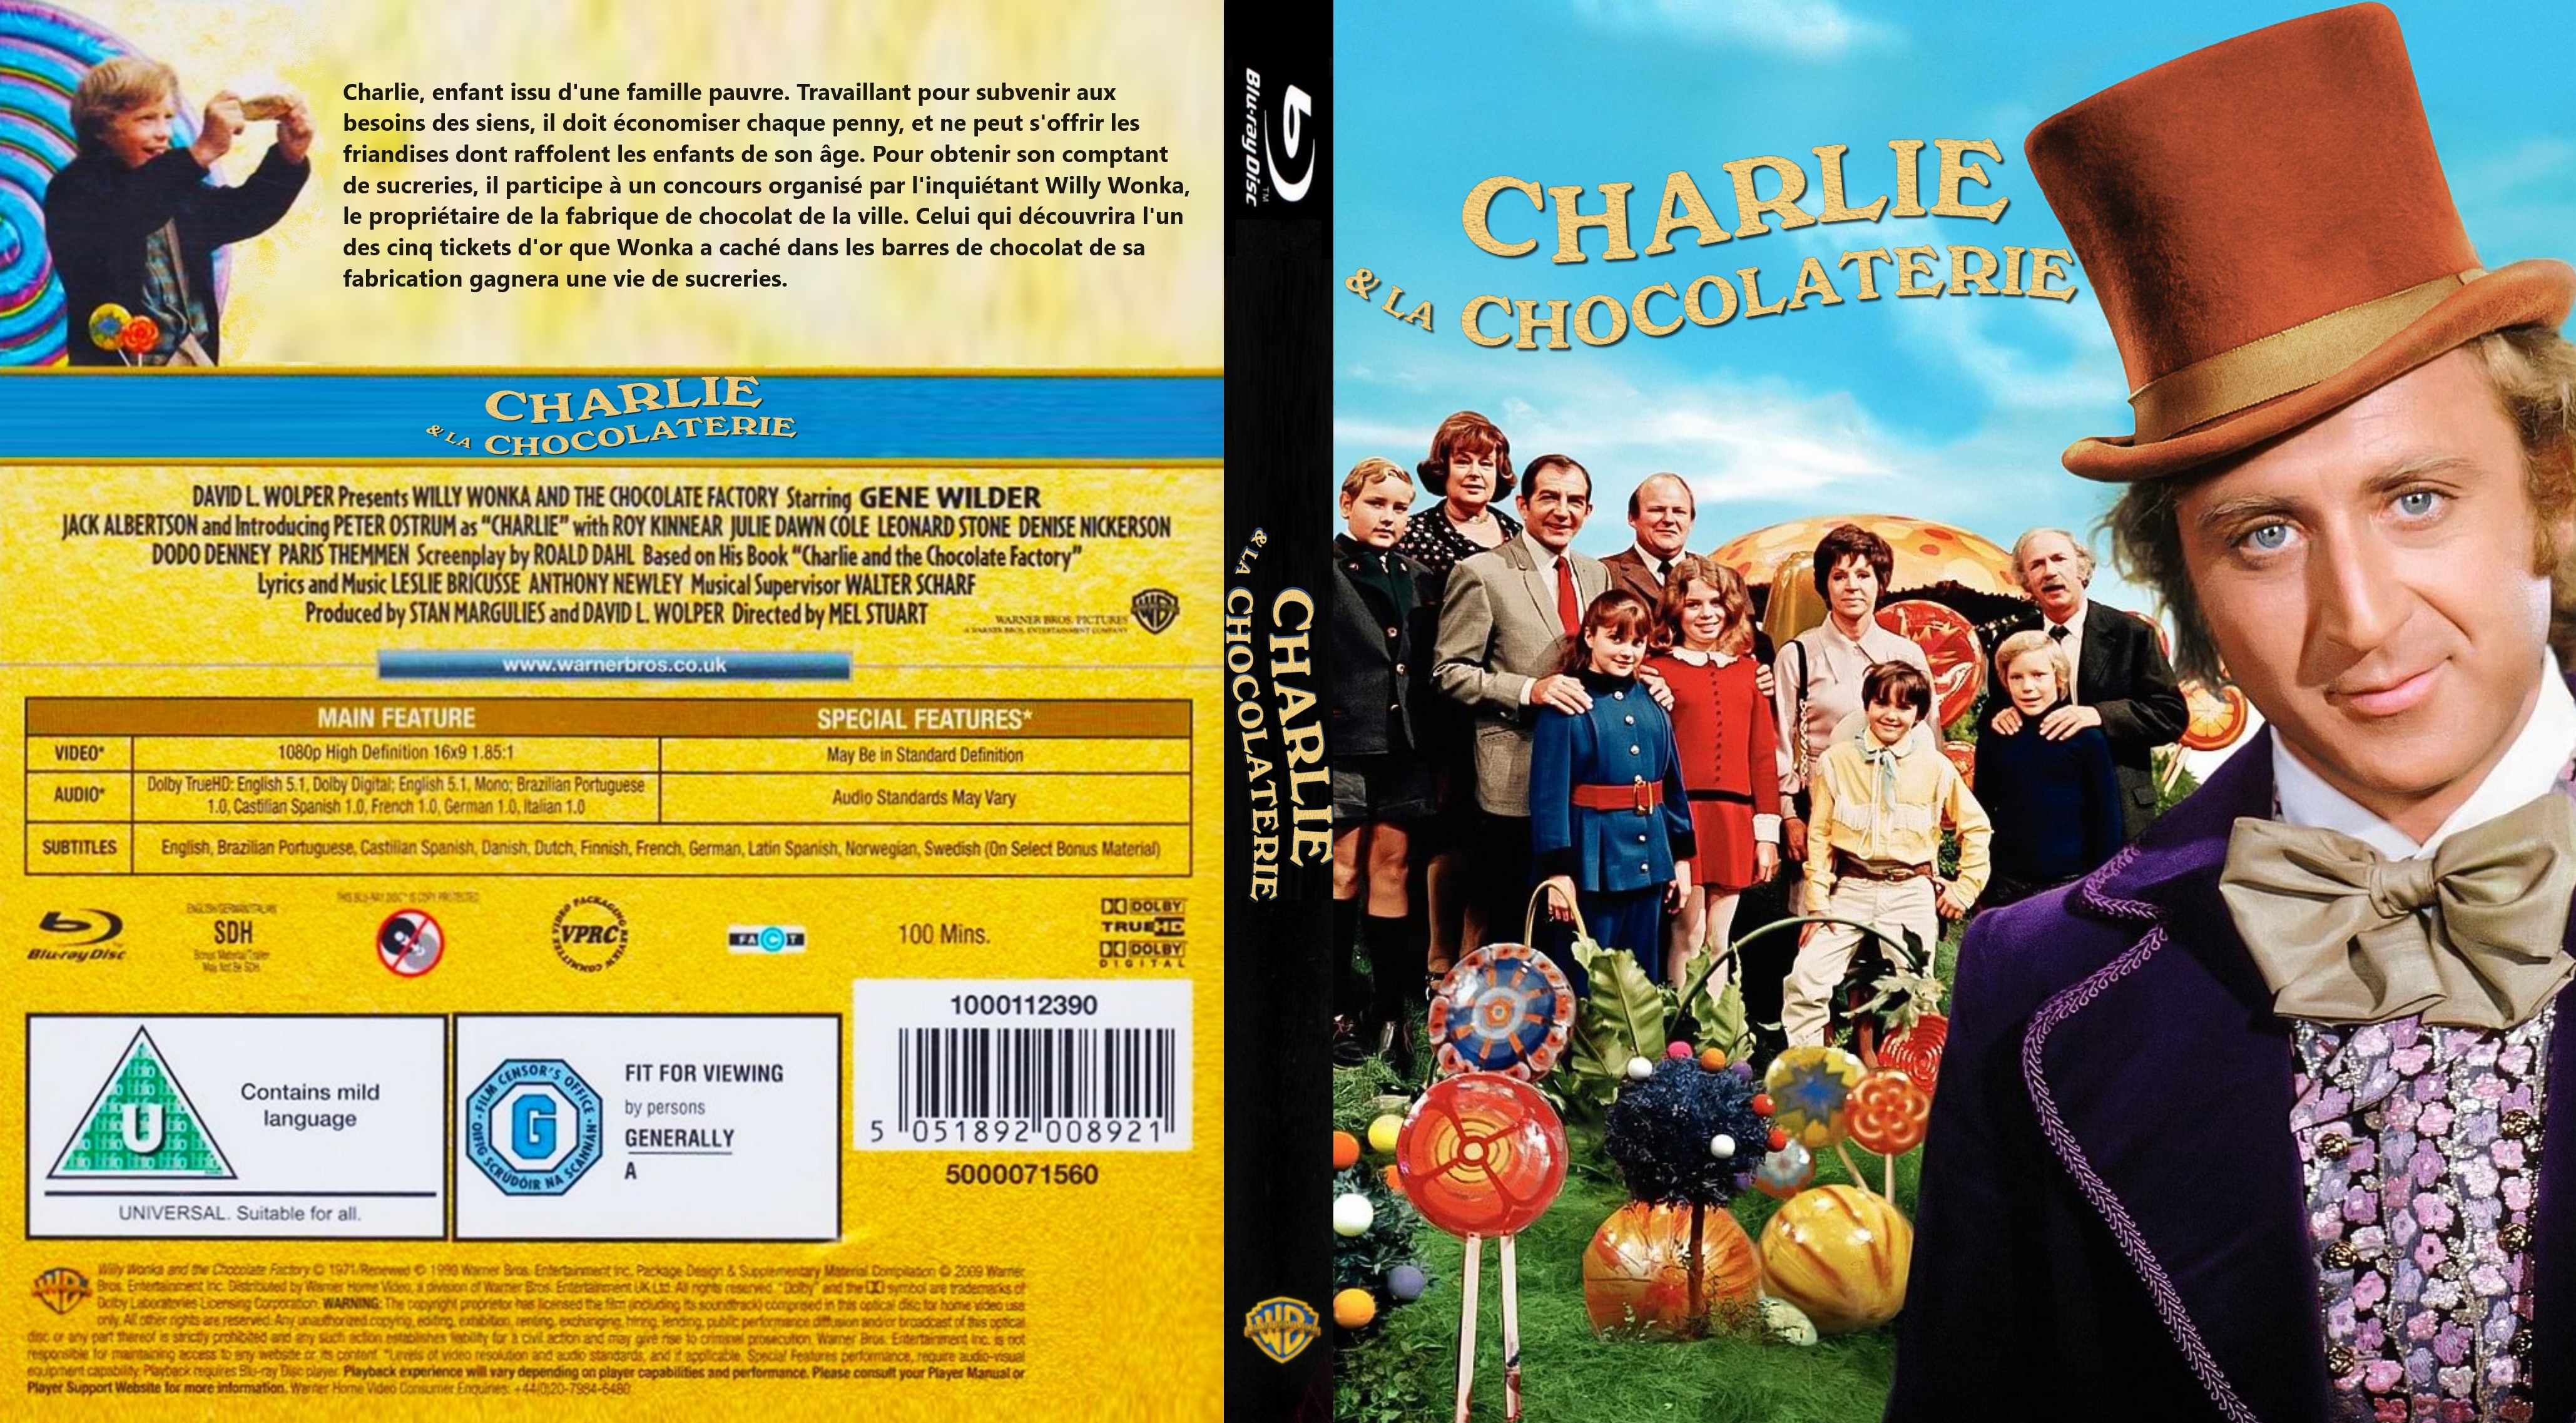 Jaquette DVD Charlie et la chocolaterie 1971 custom (BLU-RAY) v2